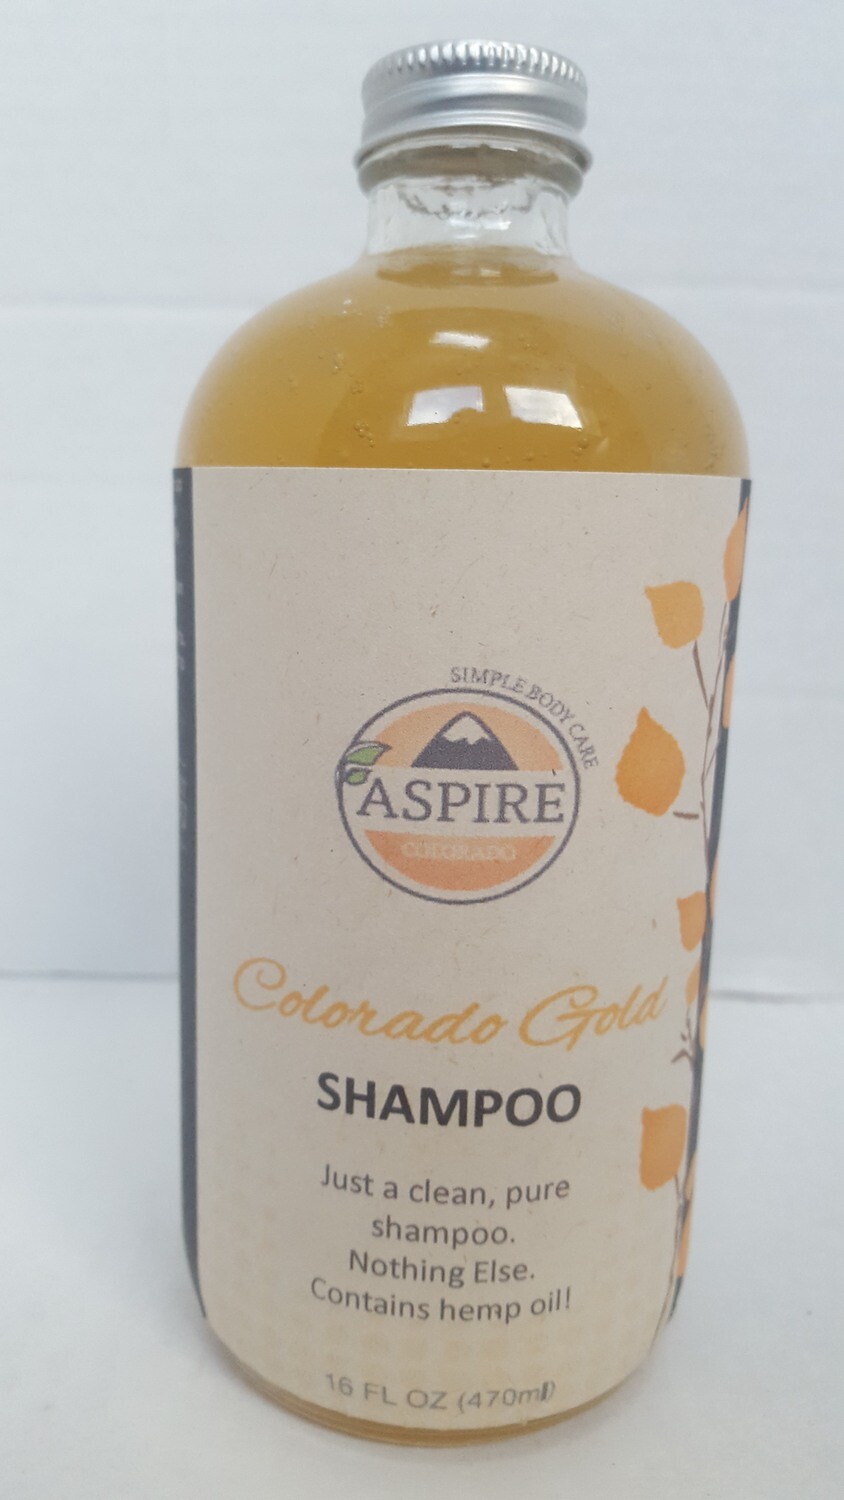 Colorado Gold Shampoo, 16 oz, Glass Bottle